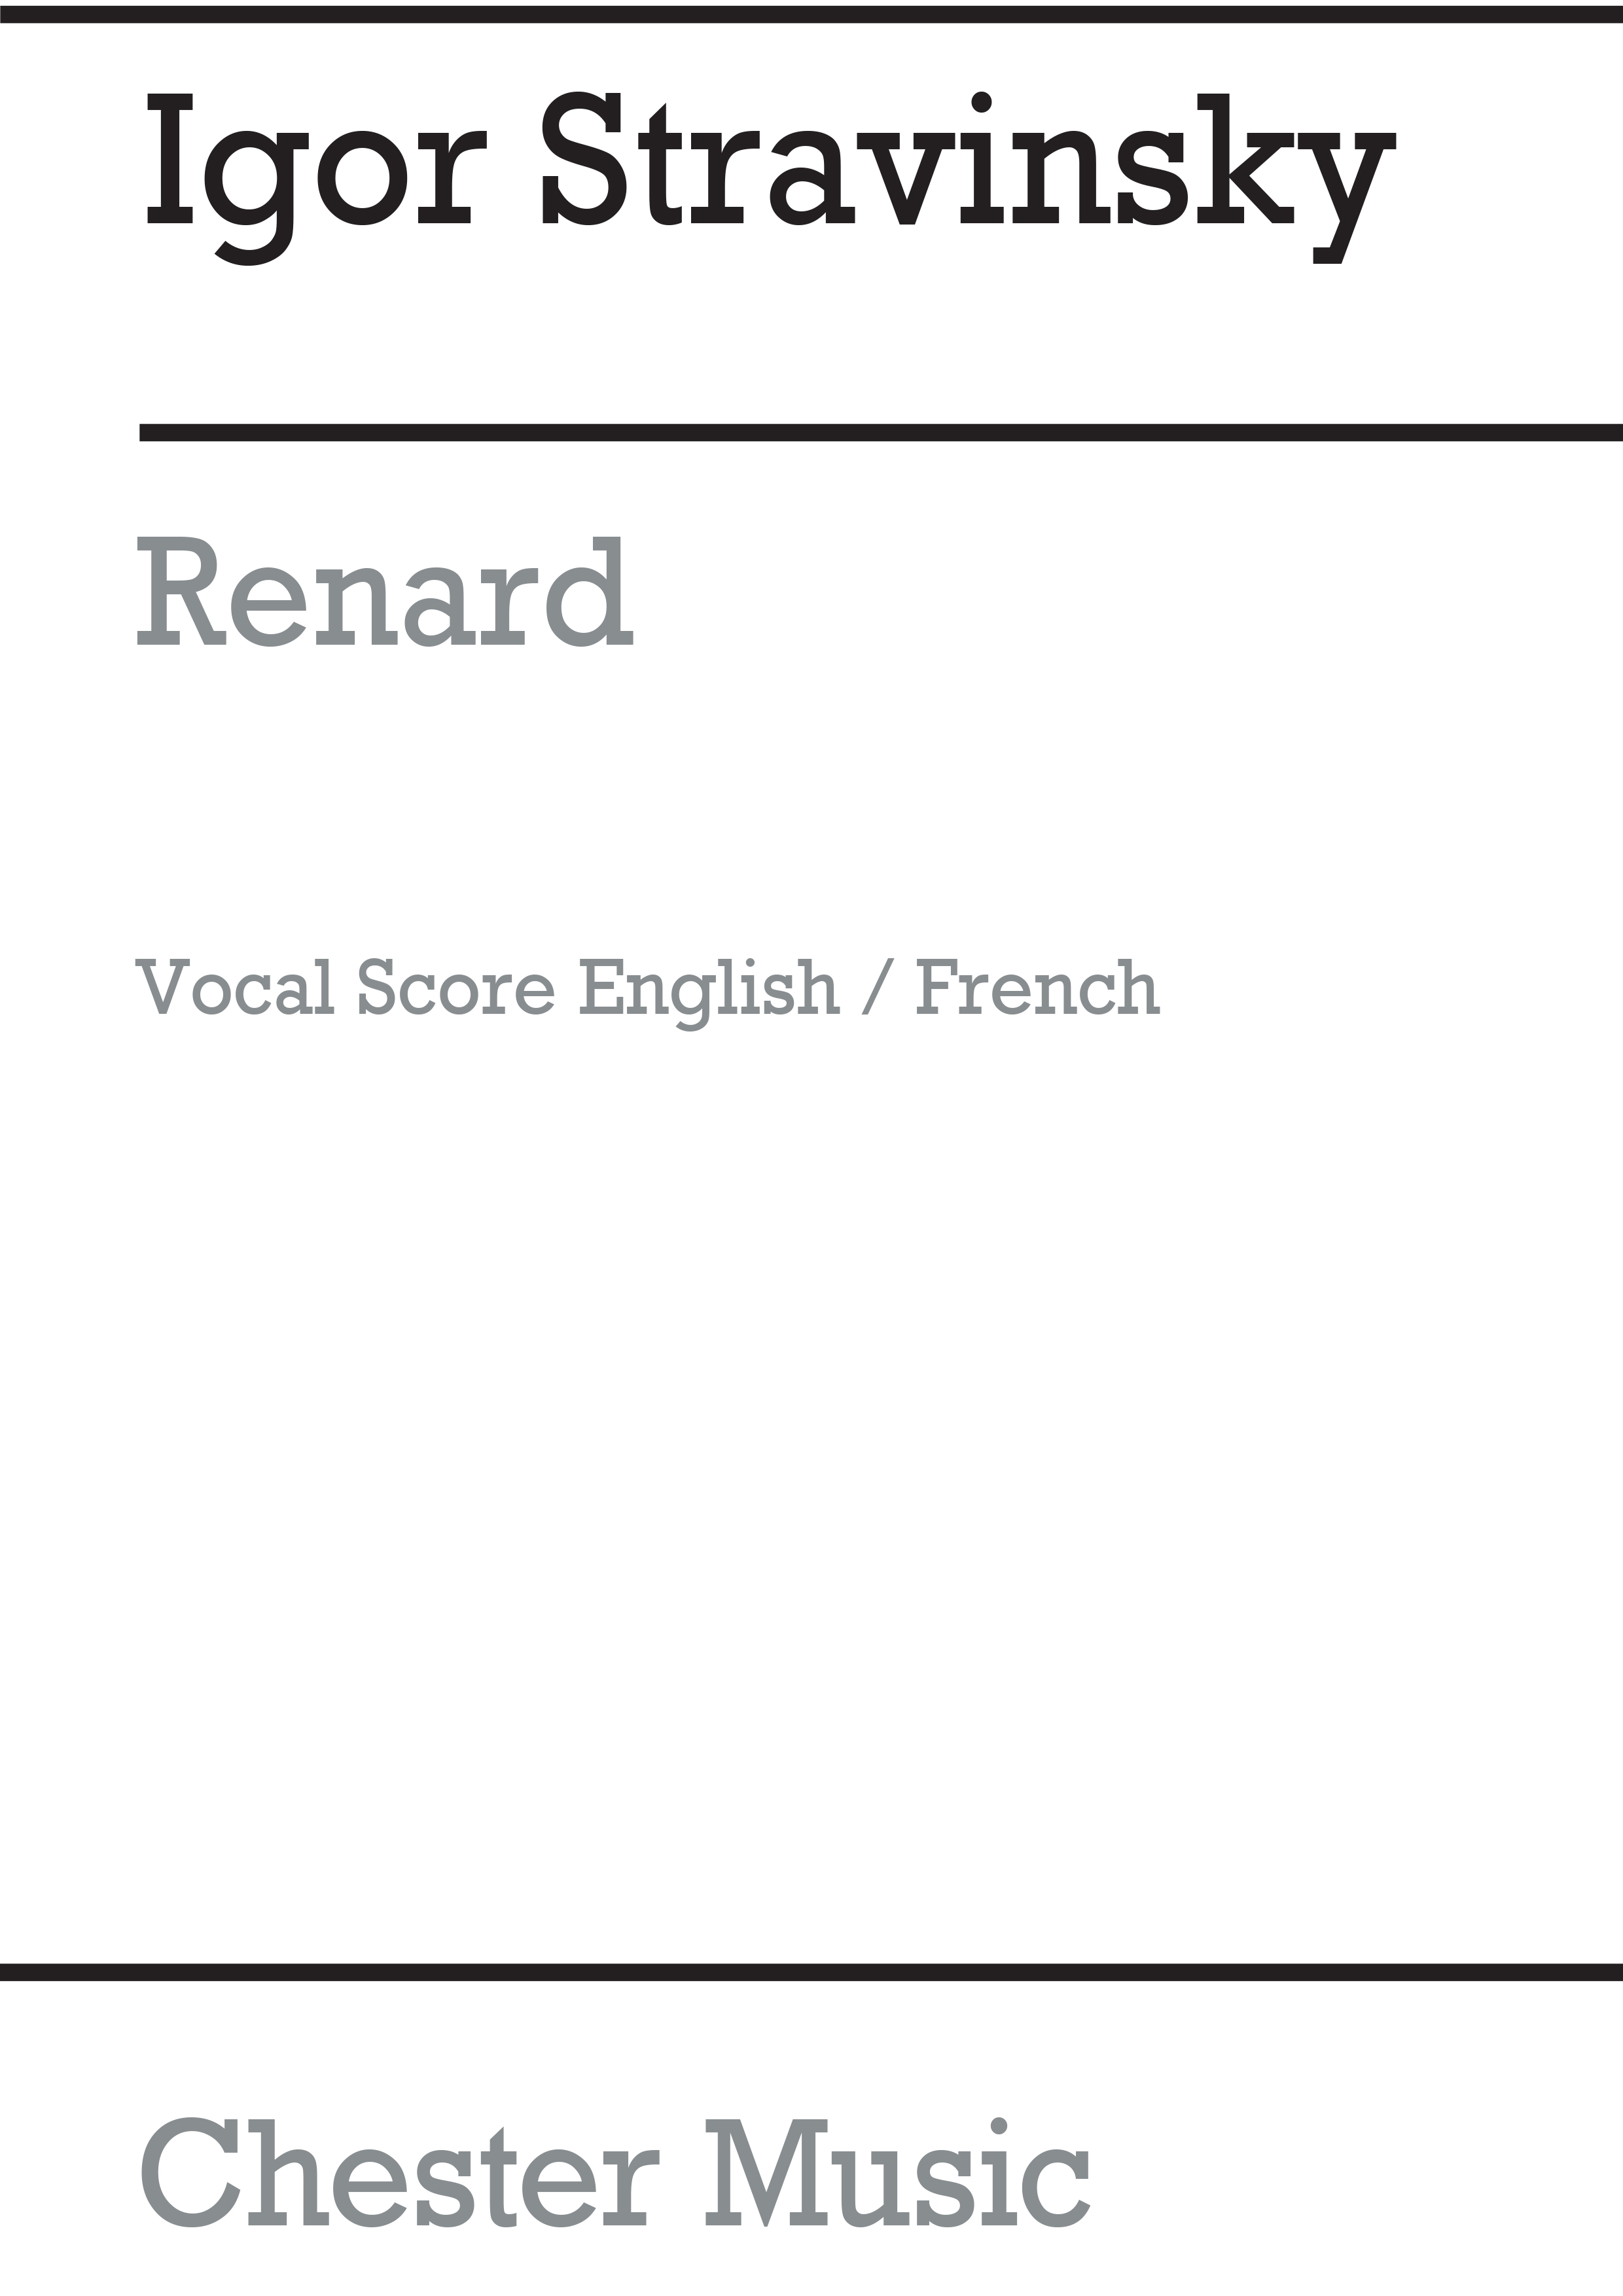 Igor Stravinsky: Renard (Vocal/Piano Score): Men's Voices: Vocal Score